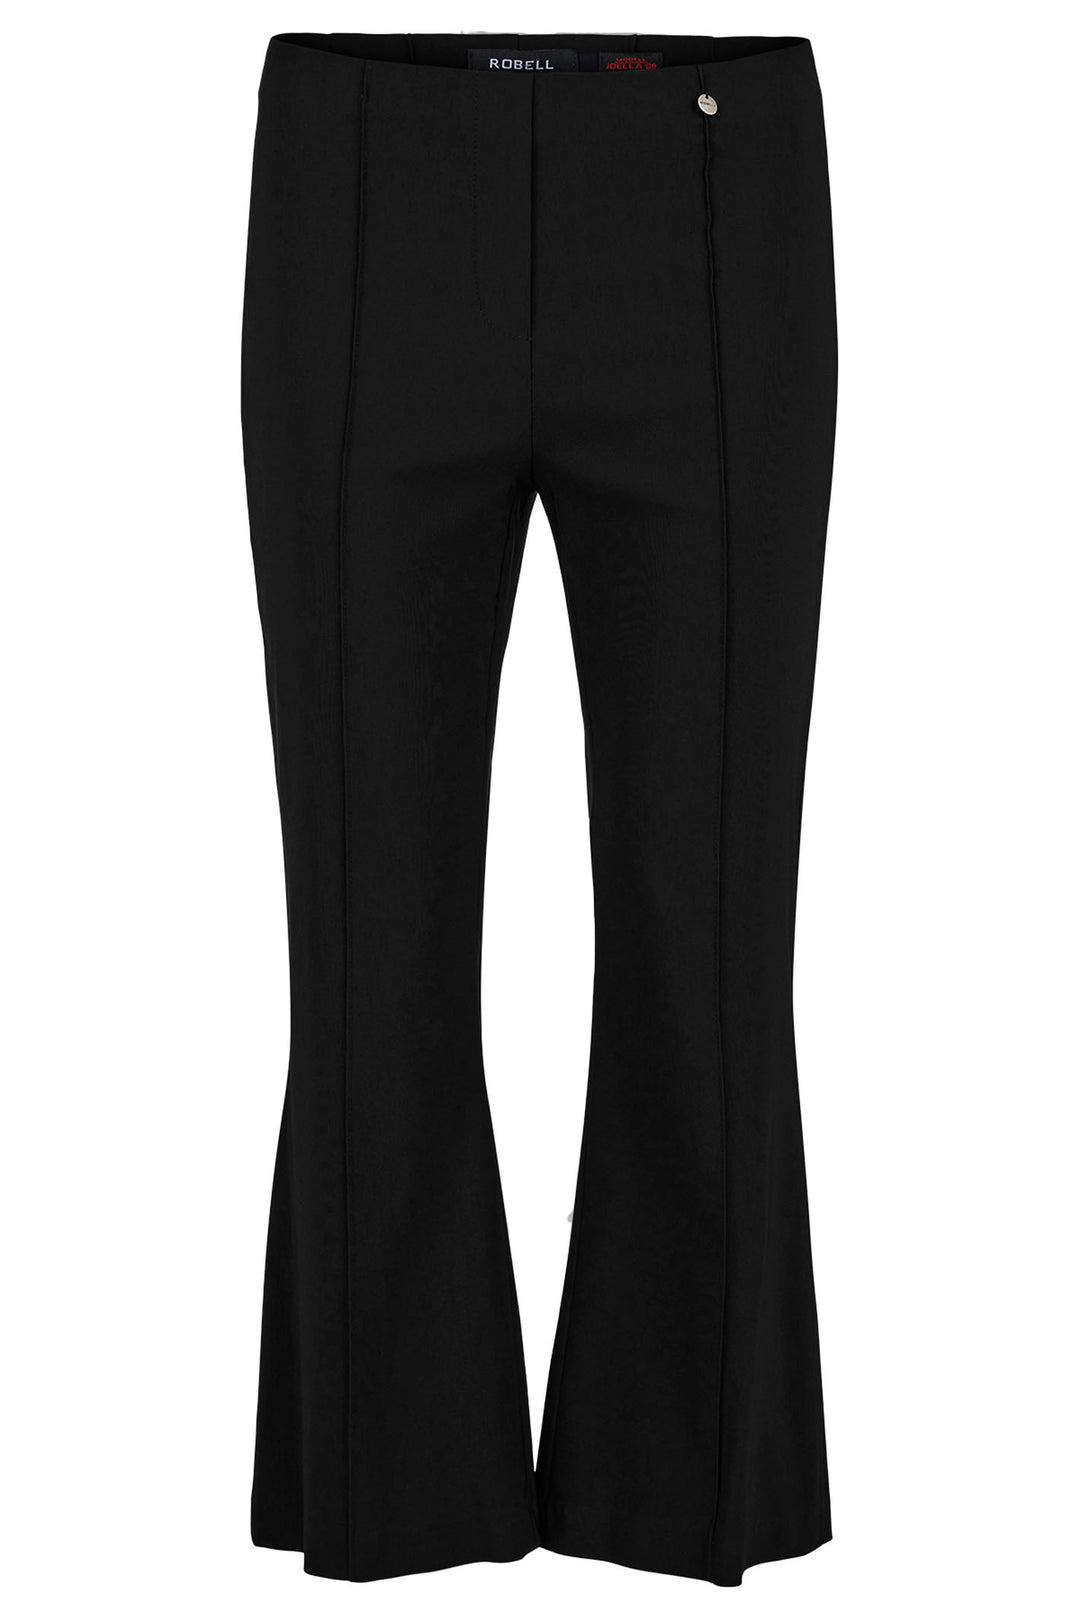 Robell 53421-5499-90 Joella Black Kick Flare Pull-On 65cm Trousers - Olivia Grace Fashion